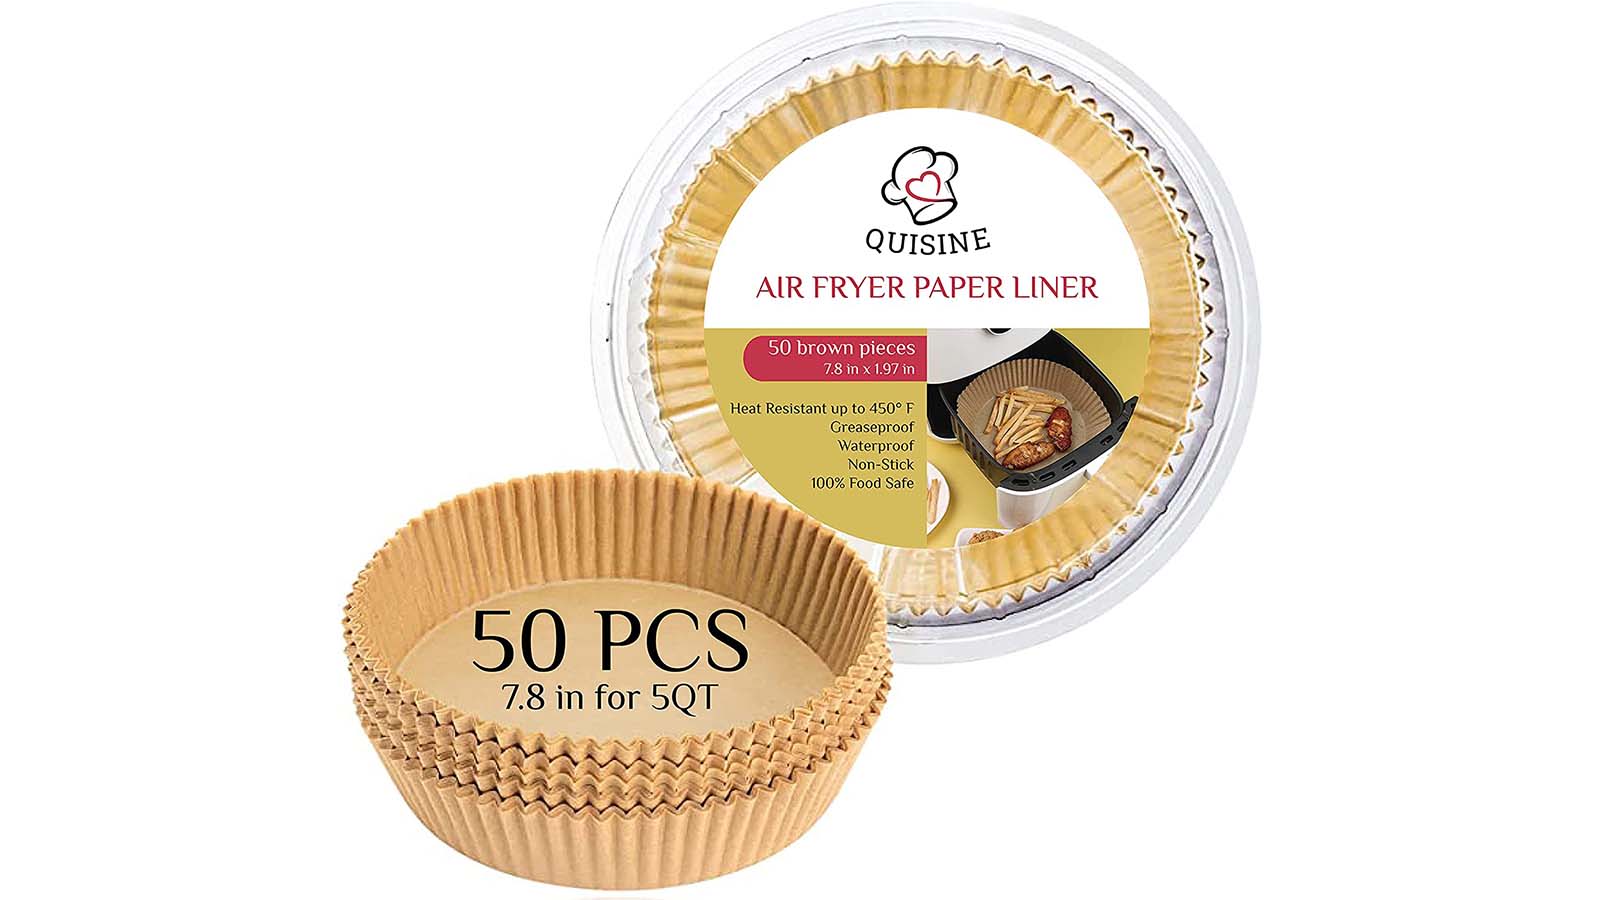 OKAY 50 pcs air fryer paper Air Fryer Disposable Paper Liner Non